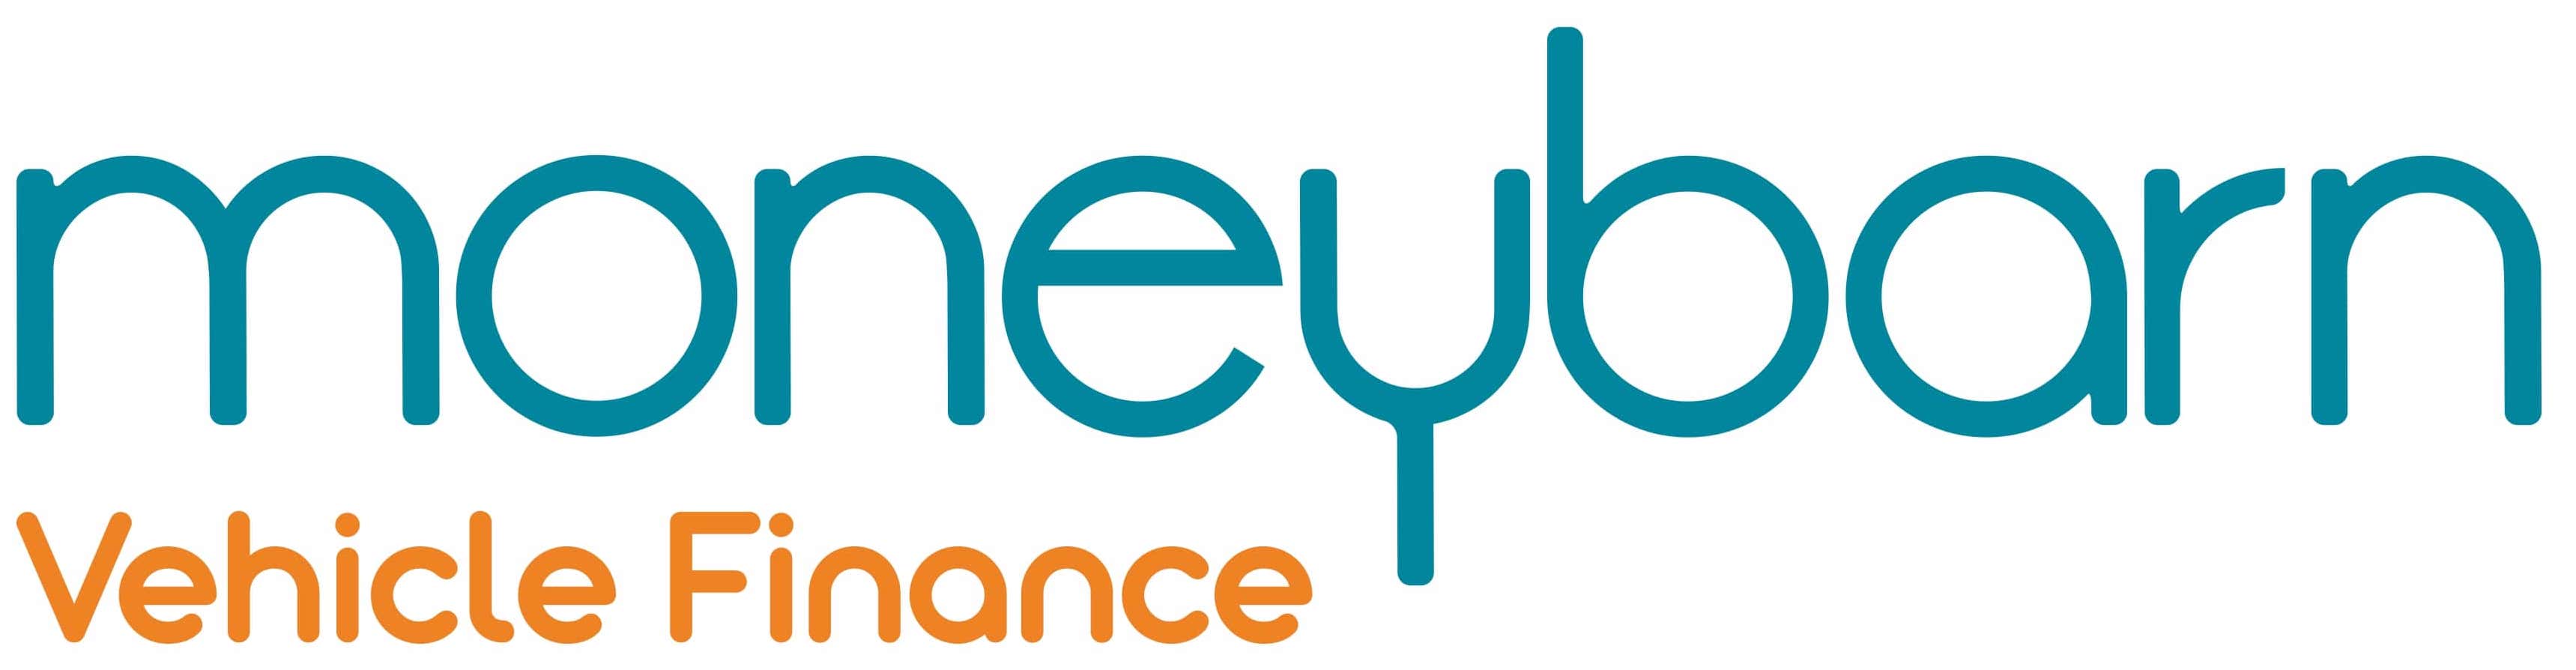 moneybarn logo